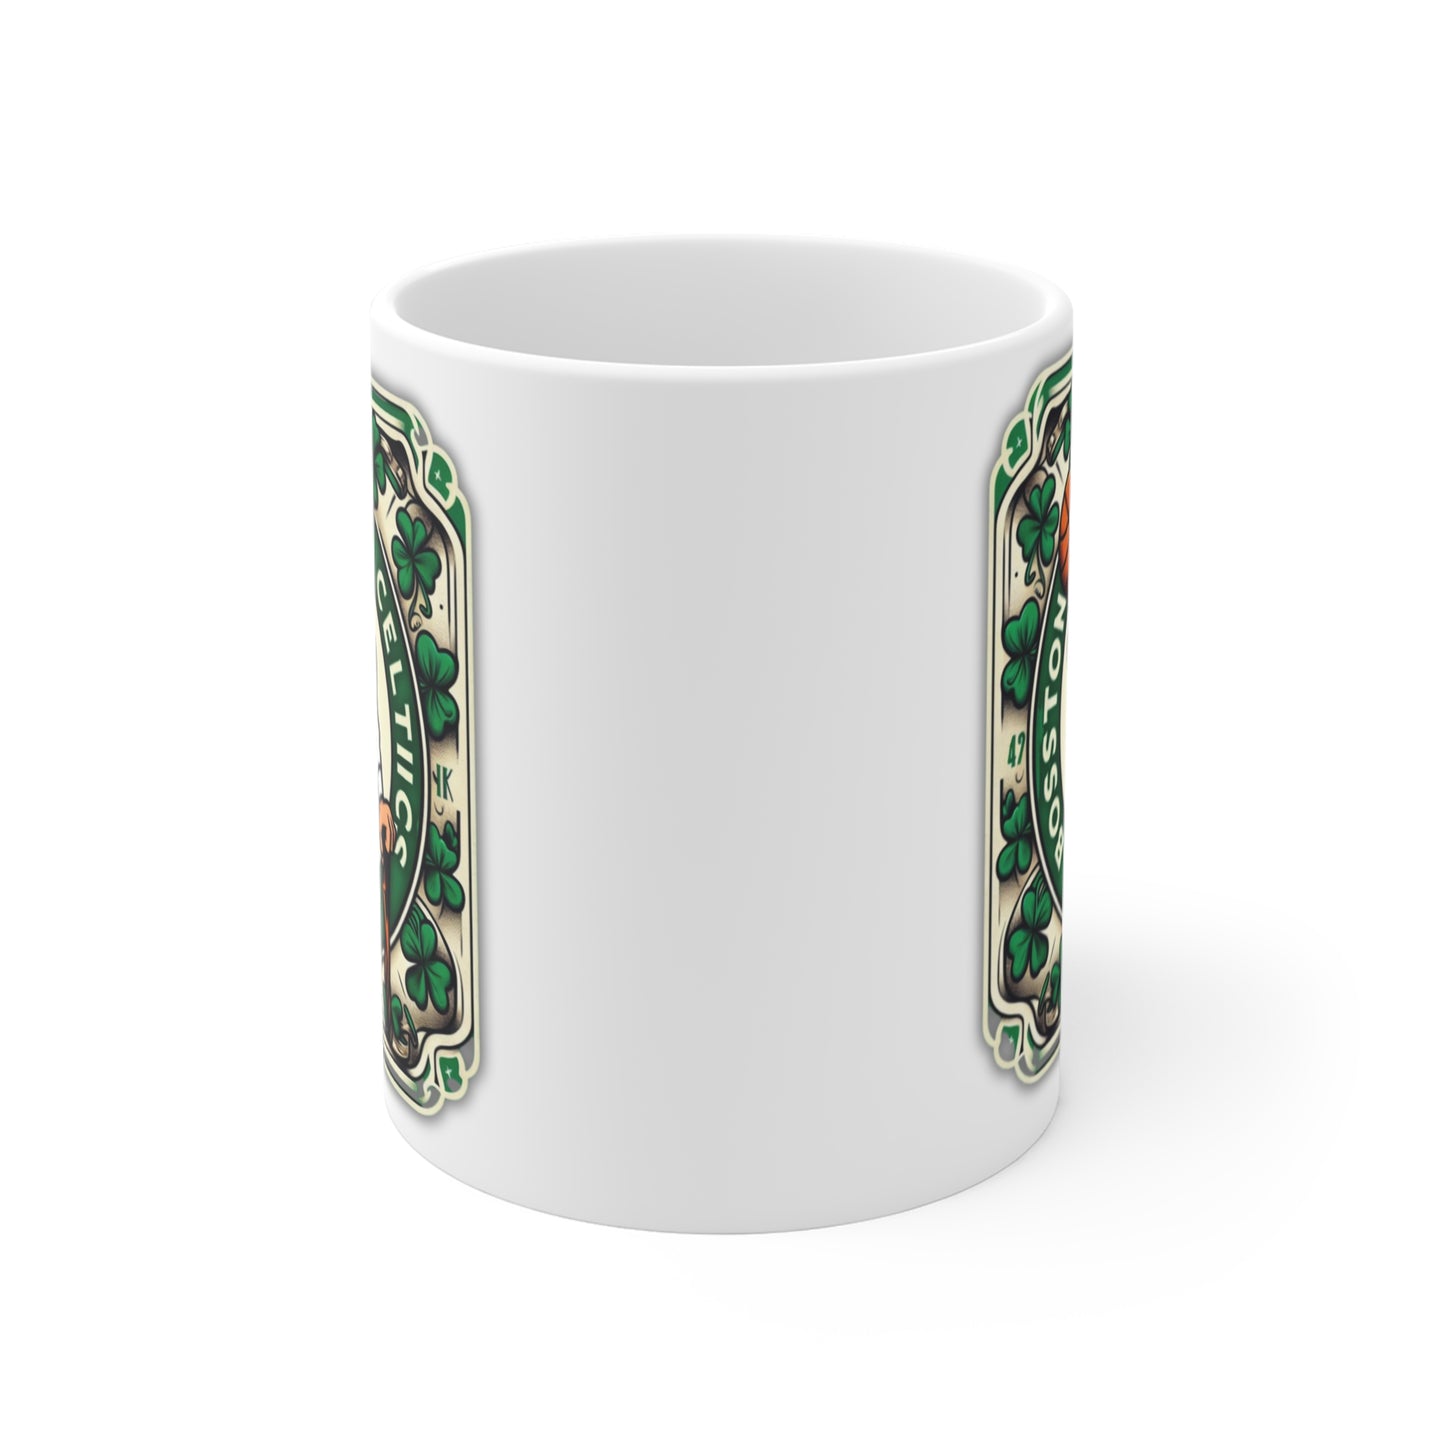 Mug with custom design 11oz, basketball lovers Cup (Boston Celtics, NBA basketball team)